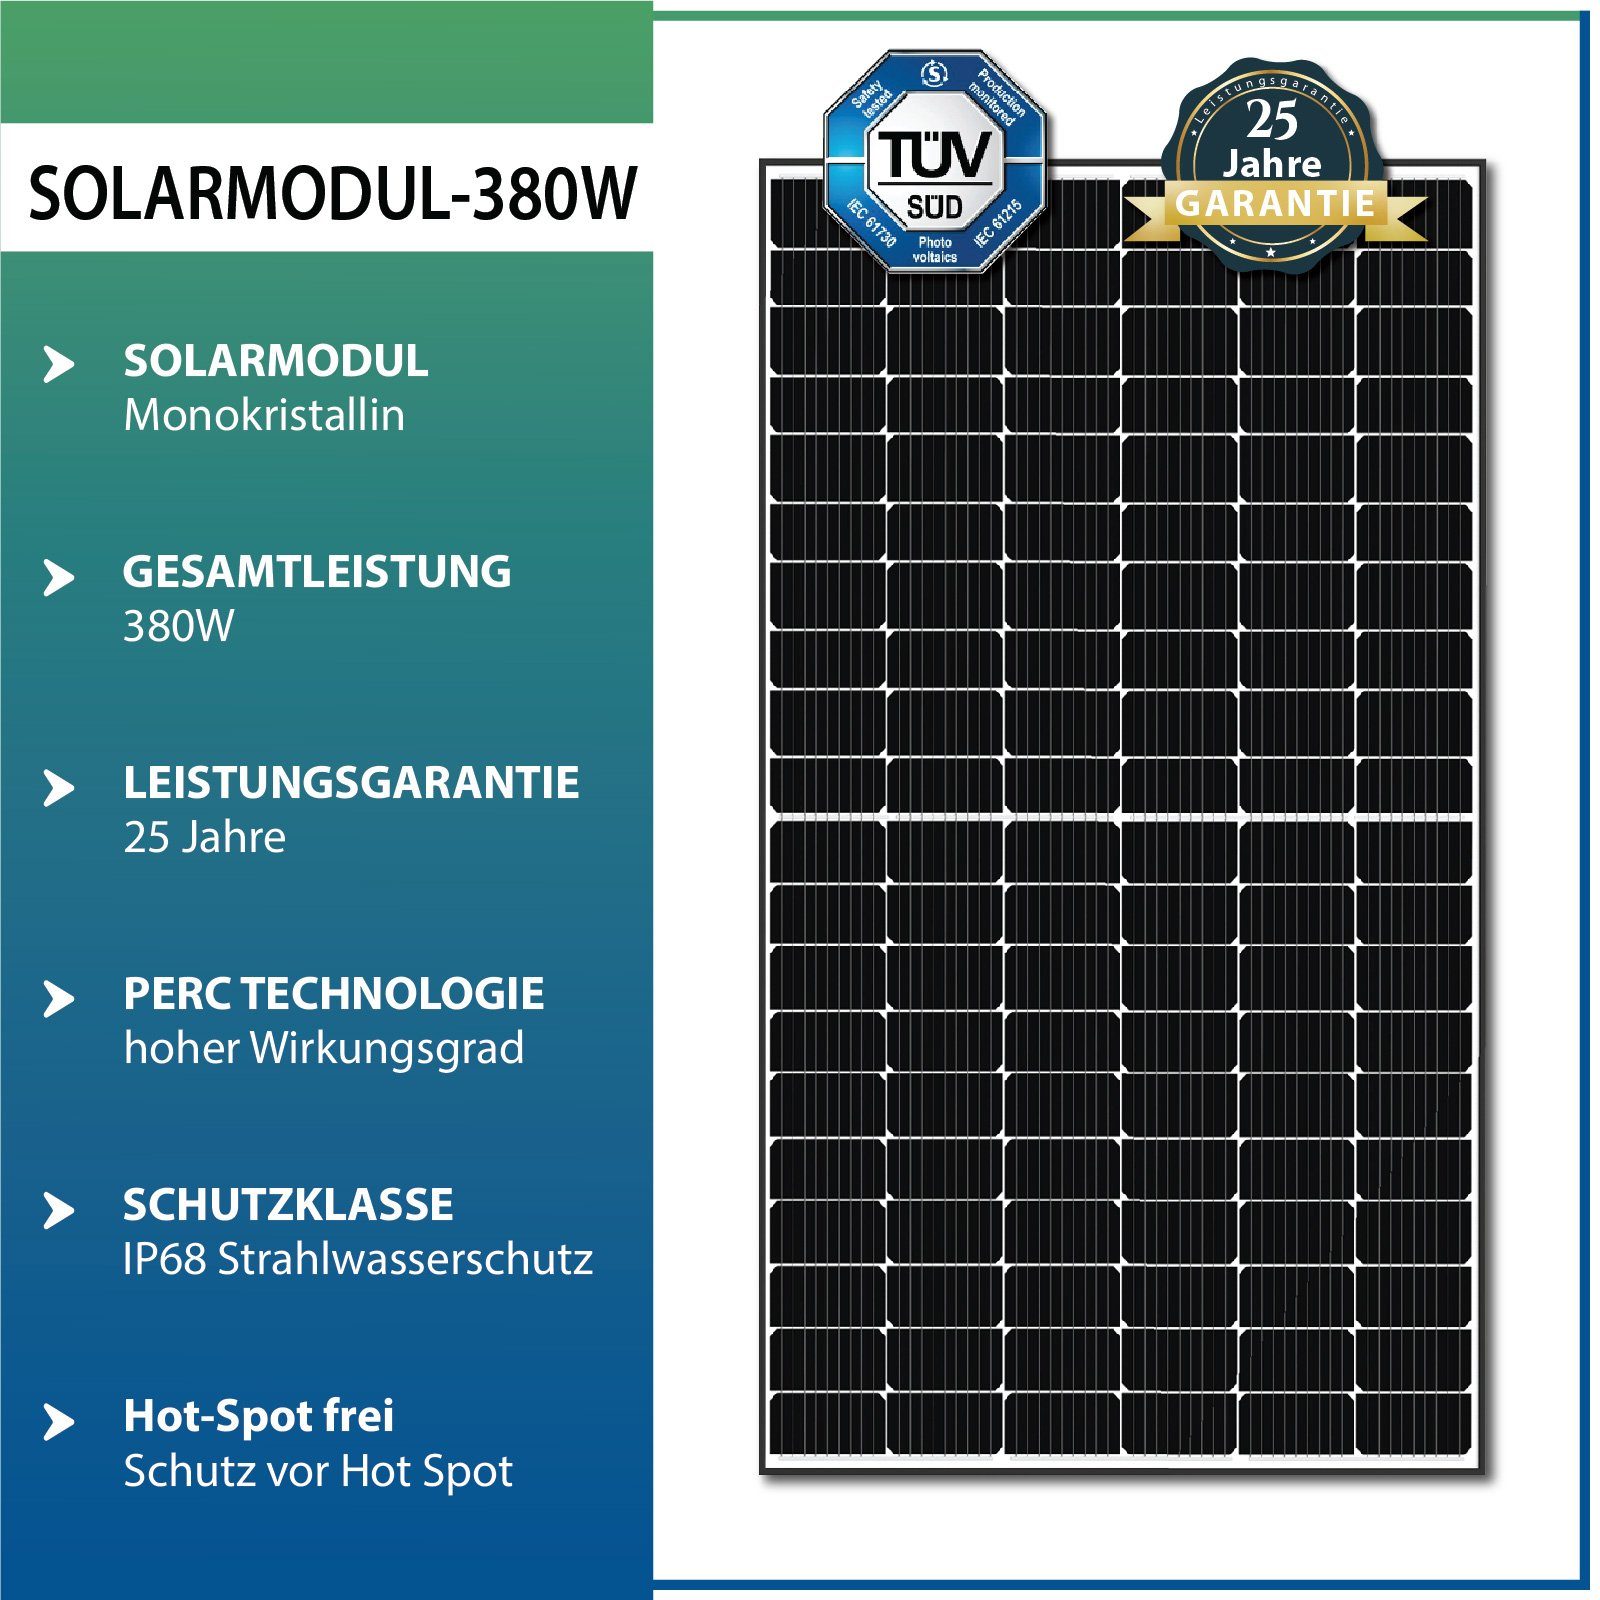 (Solarpanel) Solaranlage, Wasserdichtigkeitsklasse IP68, Schwarz Balkonkraftwerk 380W EPP.Solar Solarmodul Solarmodul Photovoltaik